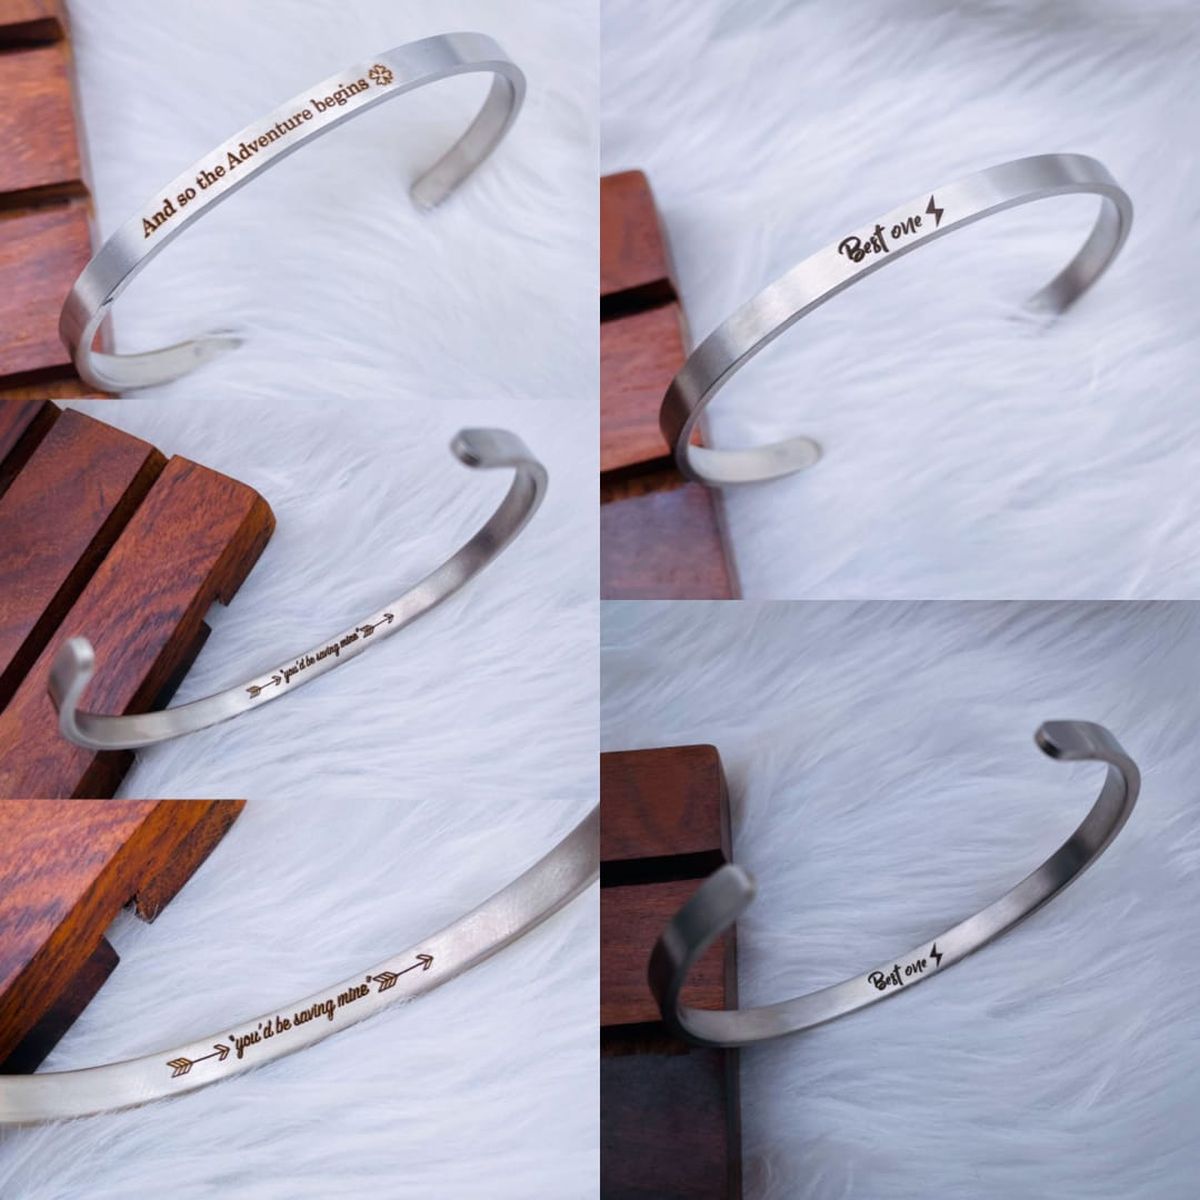 5mm Matte Finish 316 Surgical Stainless Steel Customized Personalised Laser Engraved Free Size Cuff Kada Bangle Bracelet Unisex